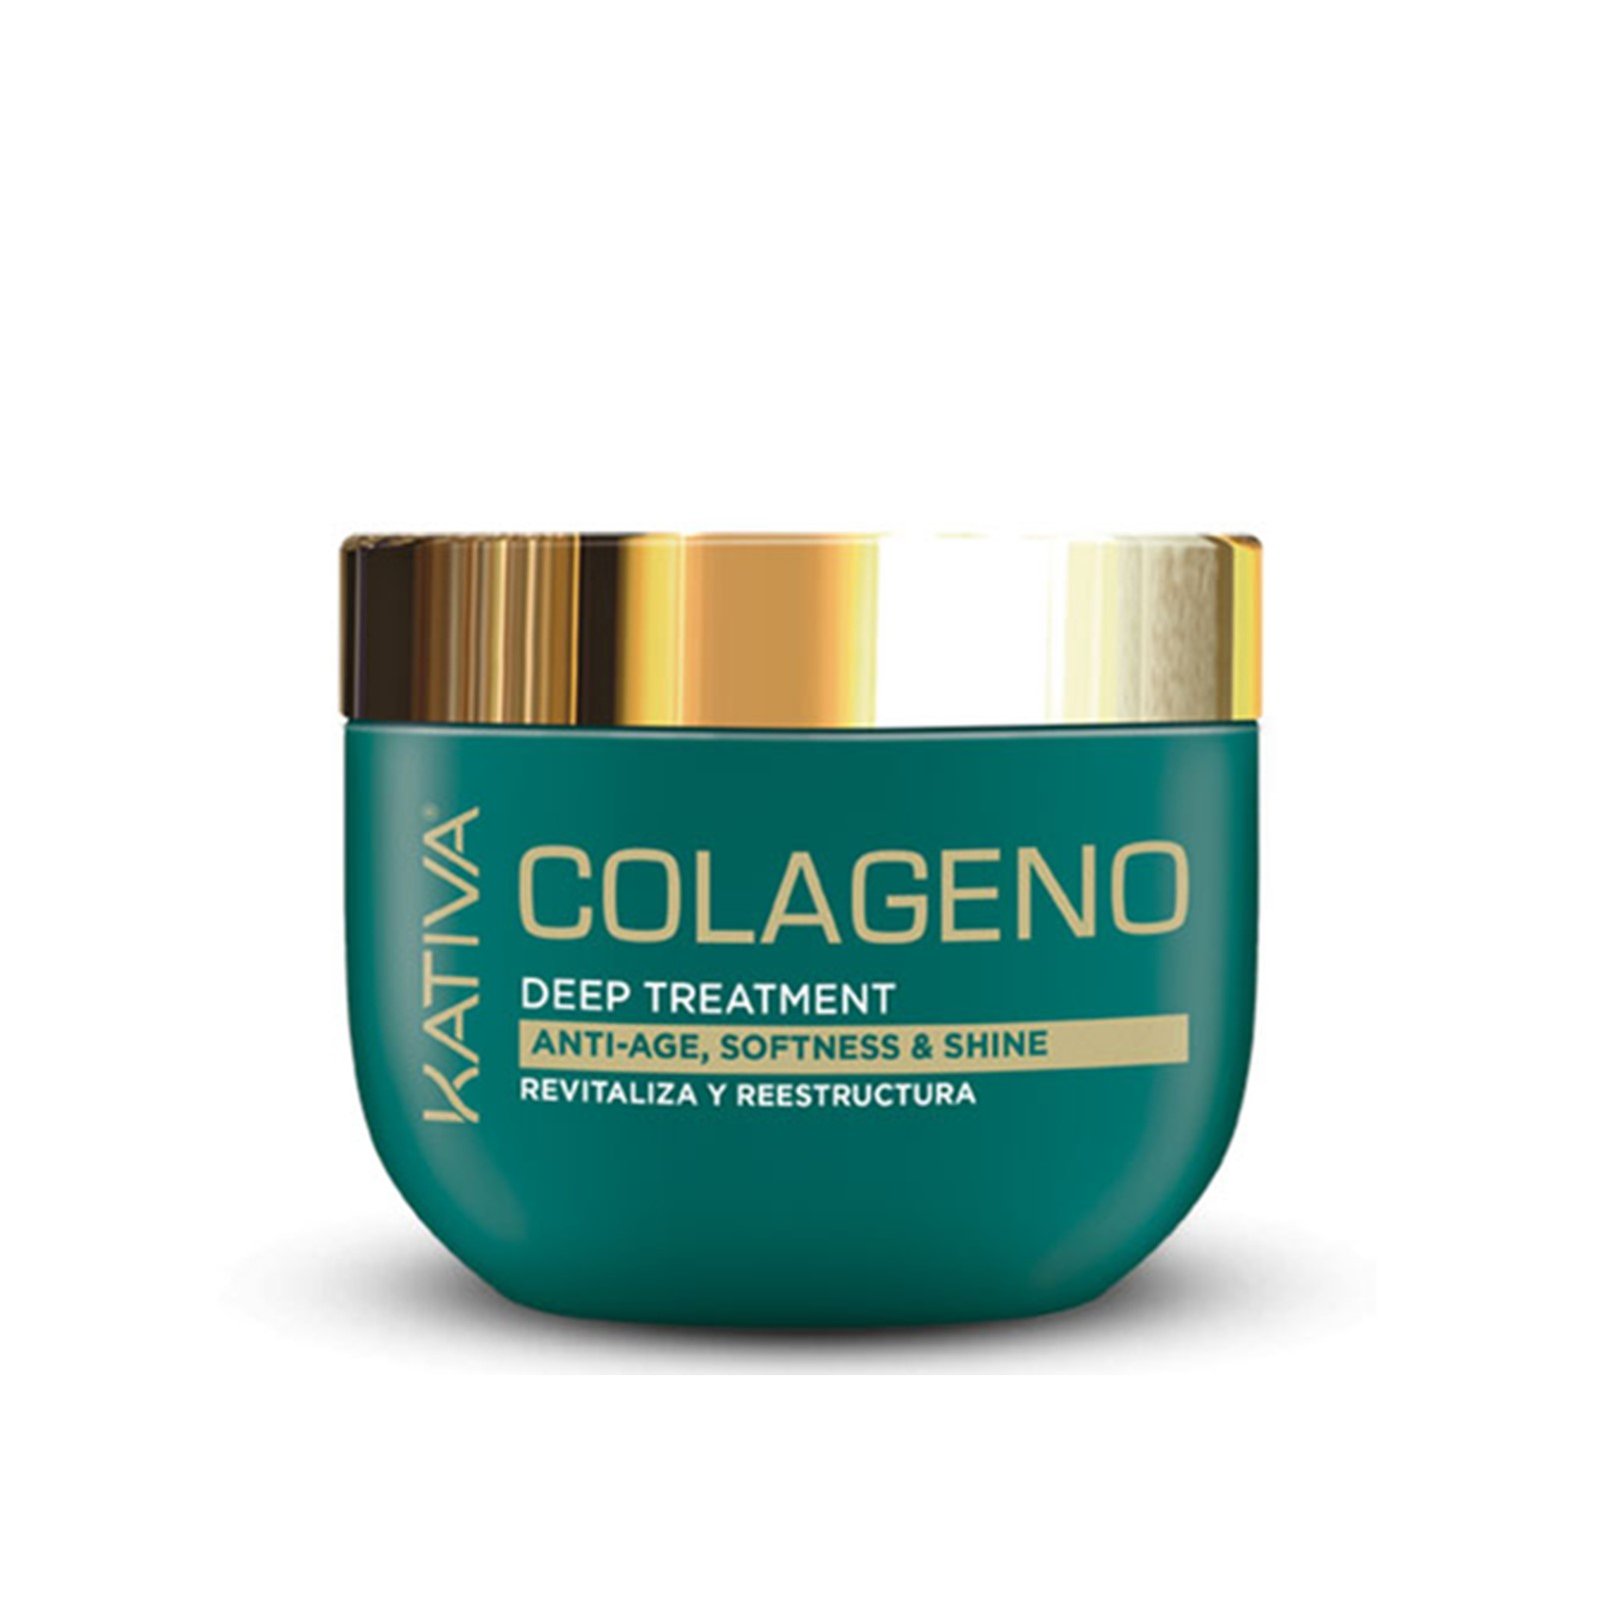 Kativa Collagen Anti-Age Softness & Shine Deep Treatment 500ml (16.9 fl oz)